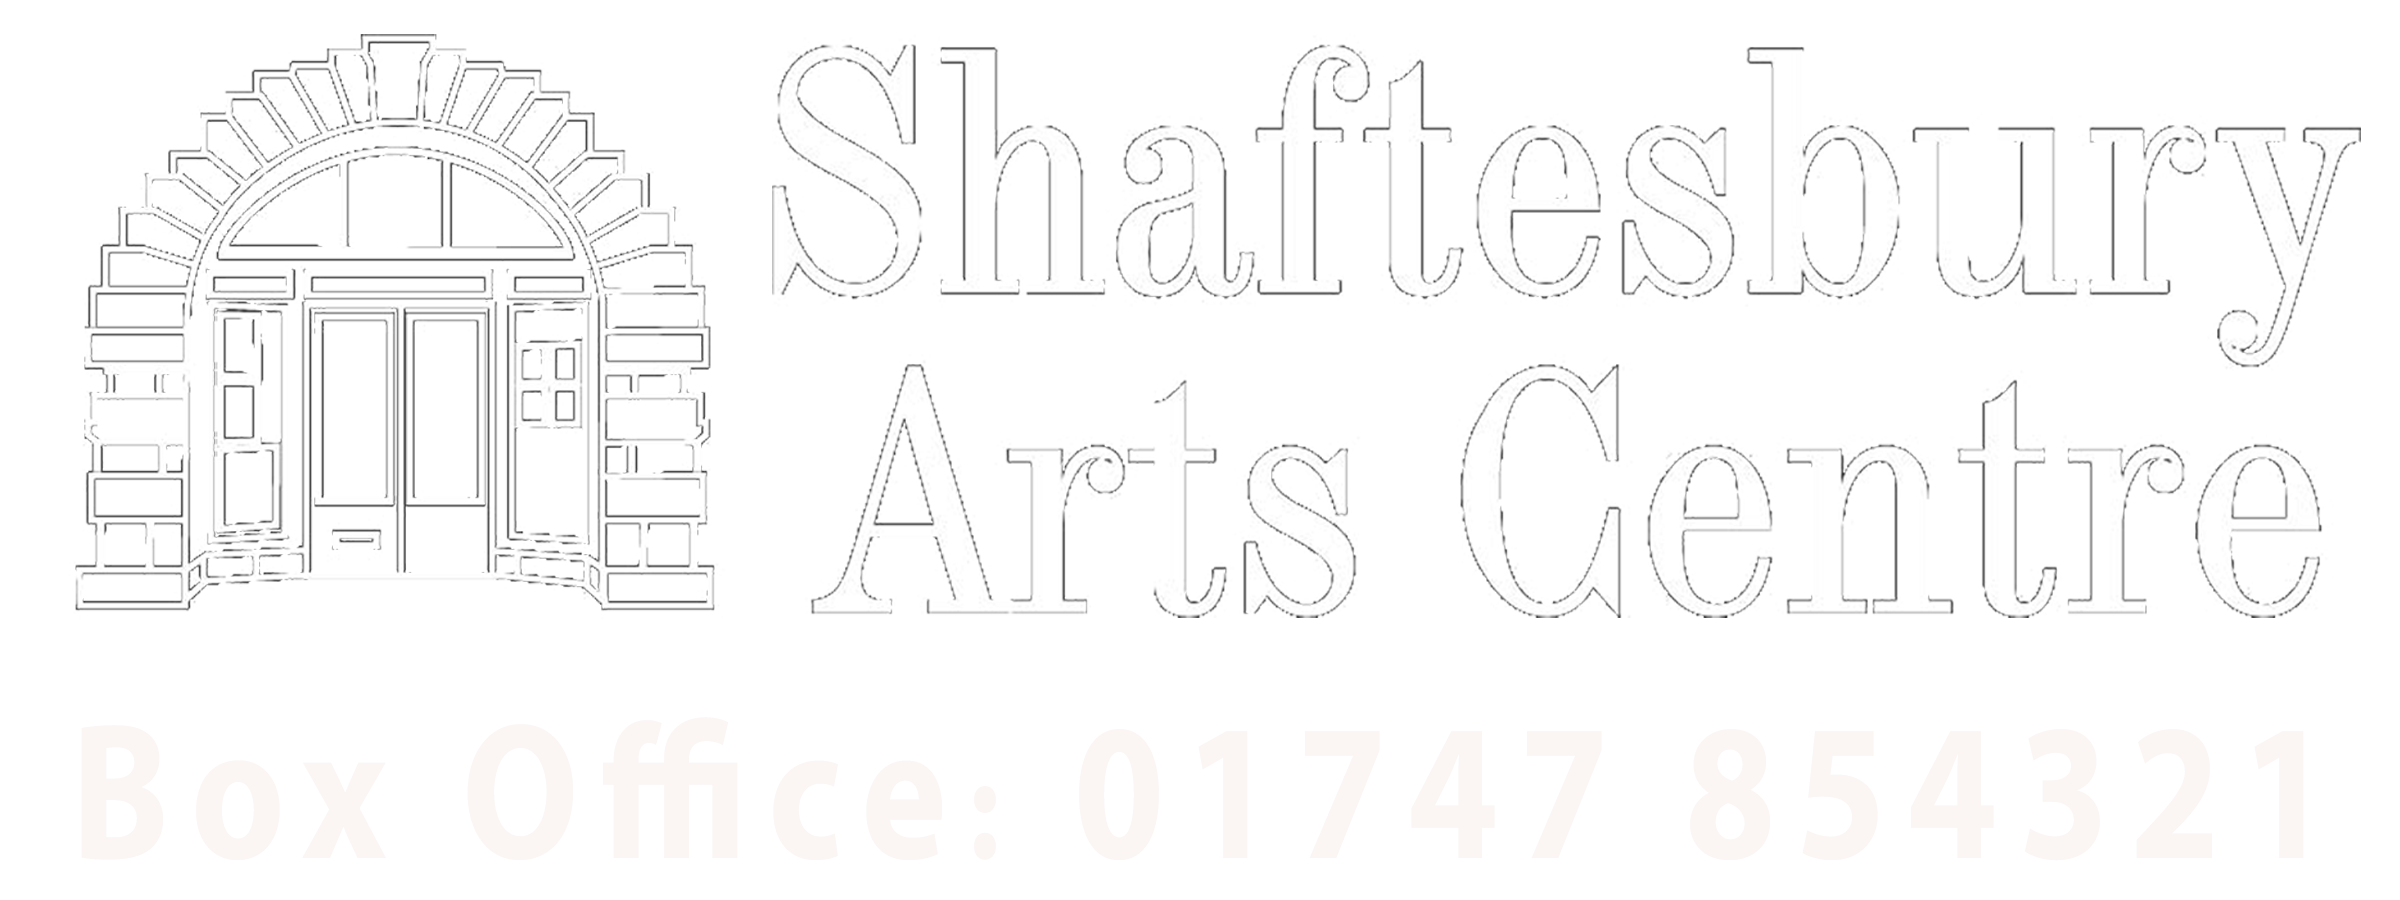 Shaftesbury Arts Centre